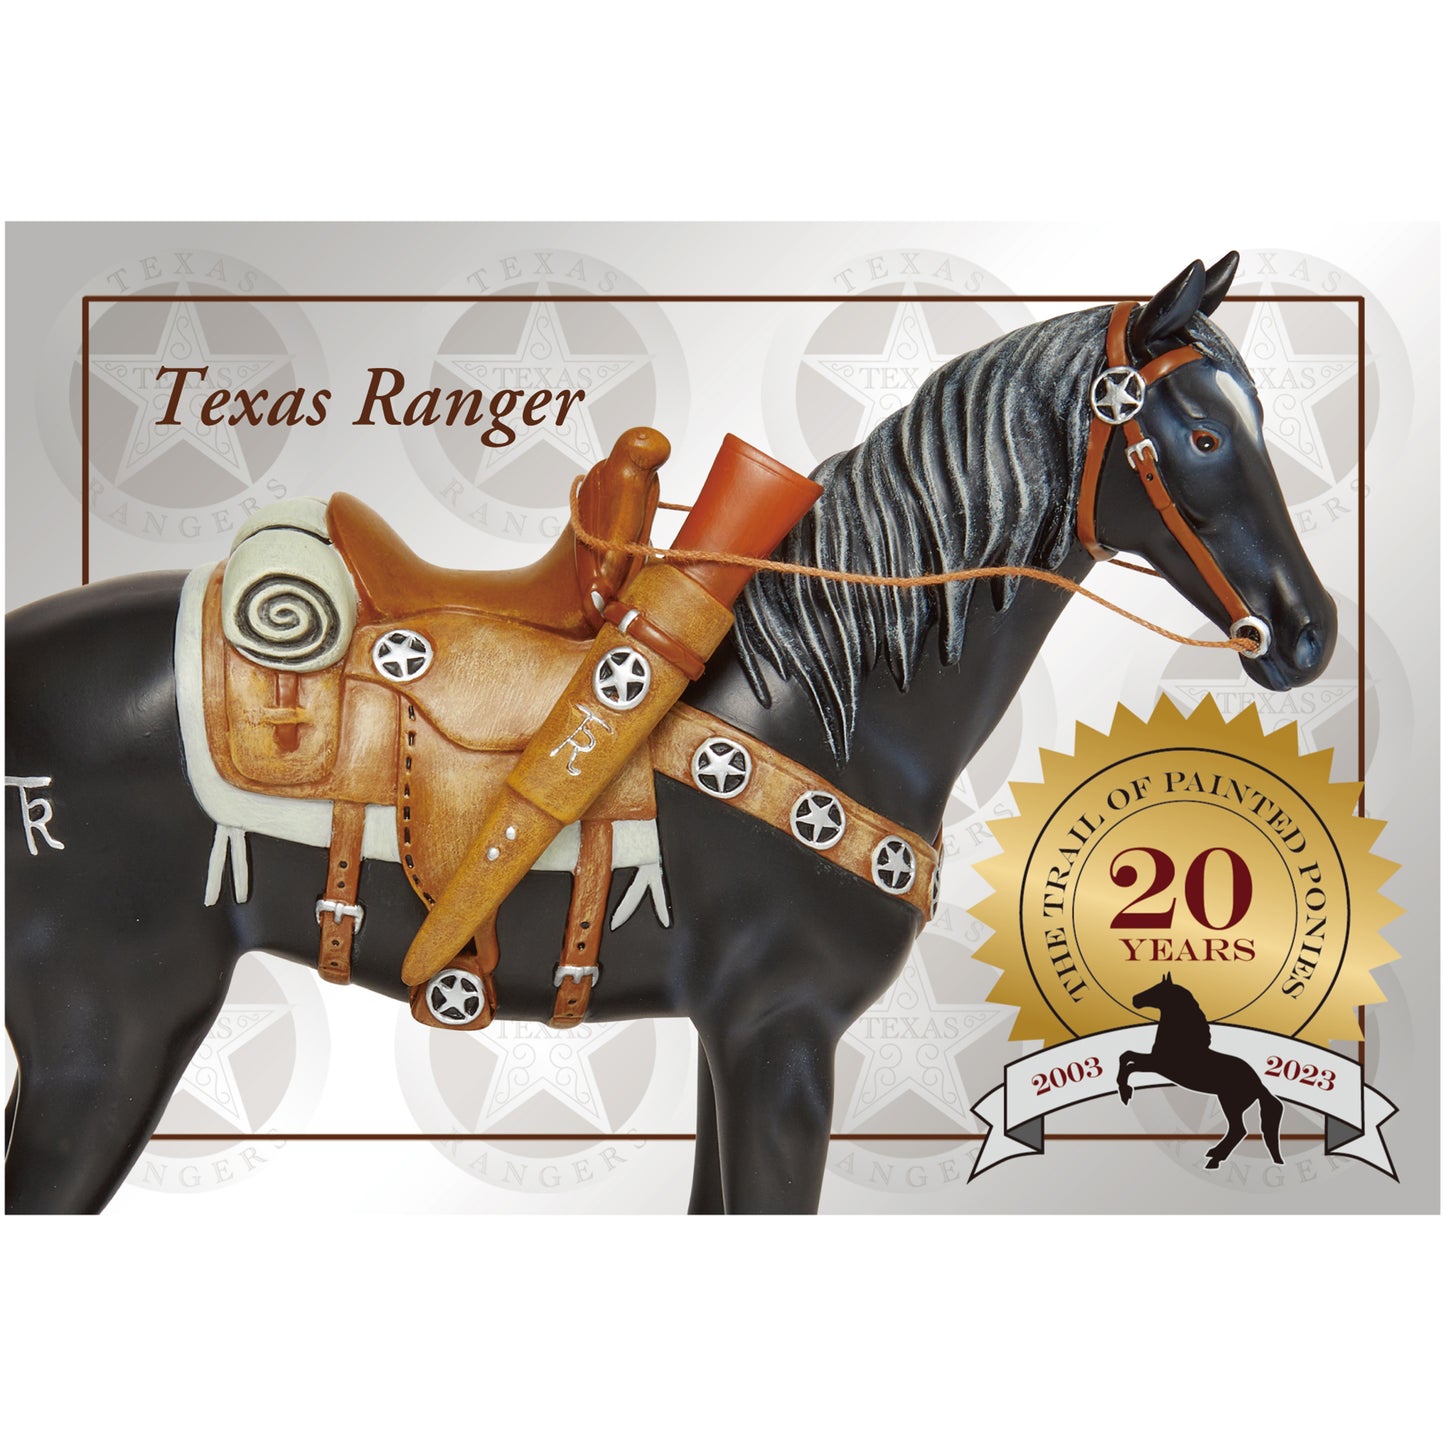 Texas Ranger - Blue Ribbon Edition